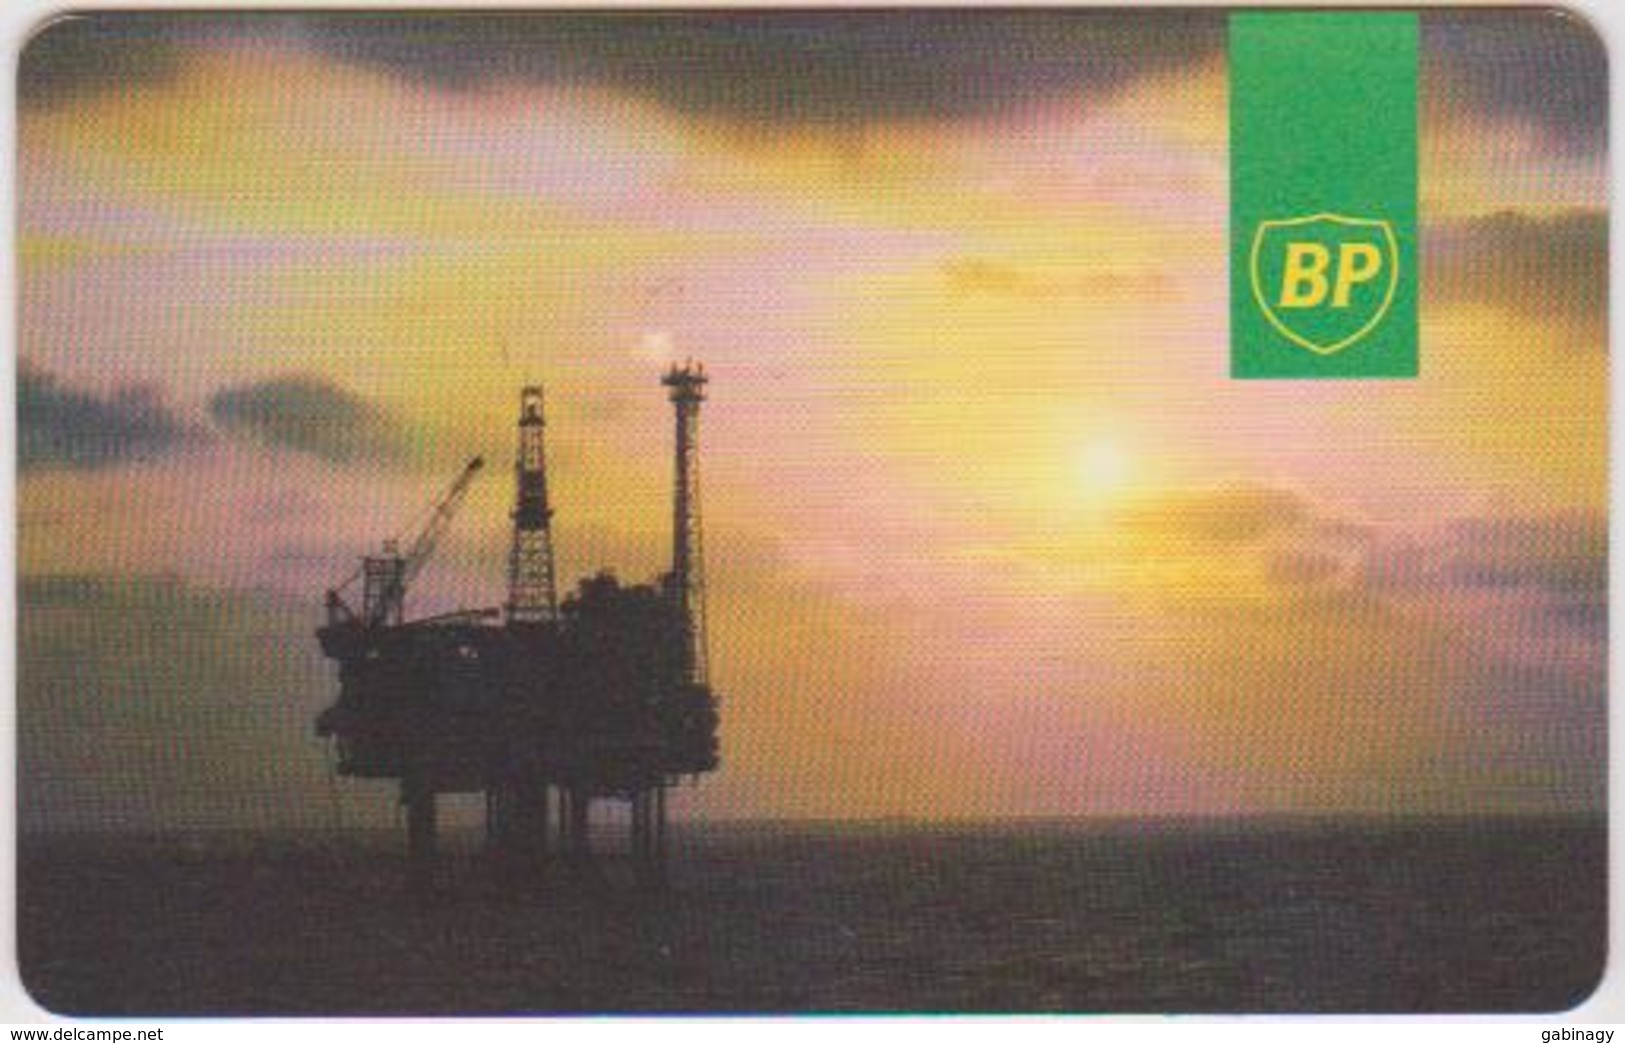 #09 - UNITED KINGDOM-07 - BP - 50 UNITS - [ 2] Plataformas Petroleras